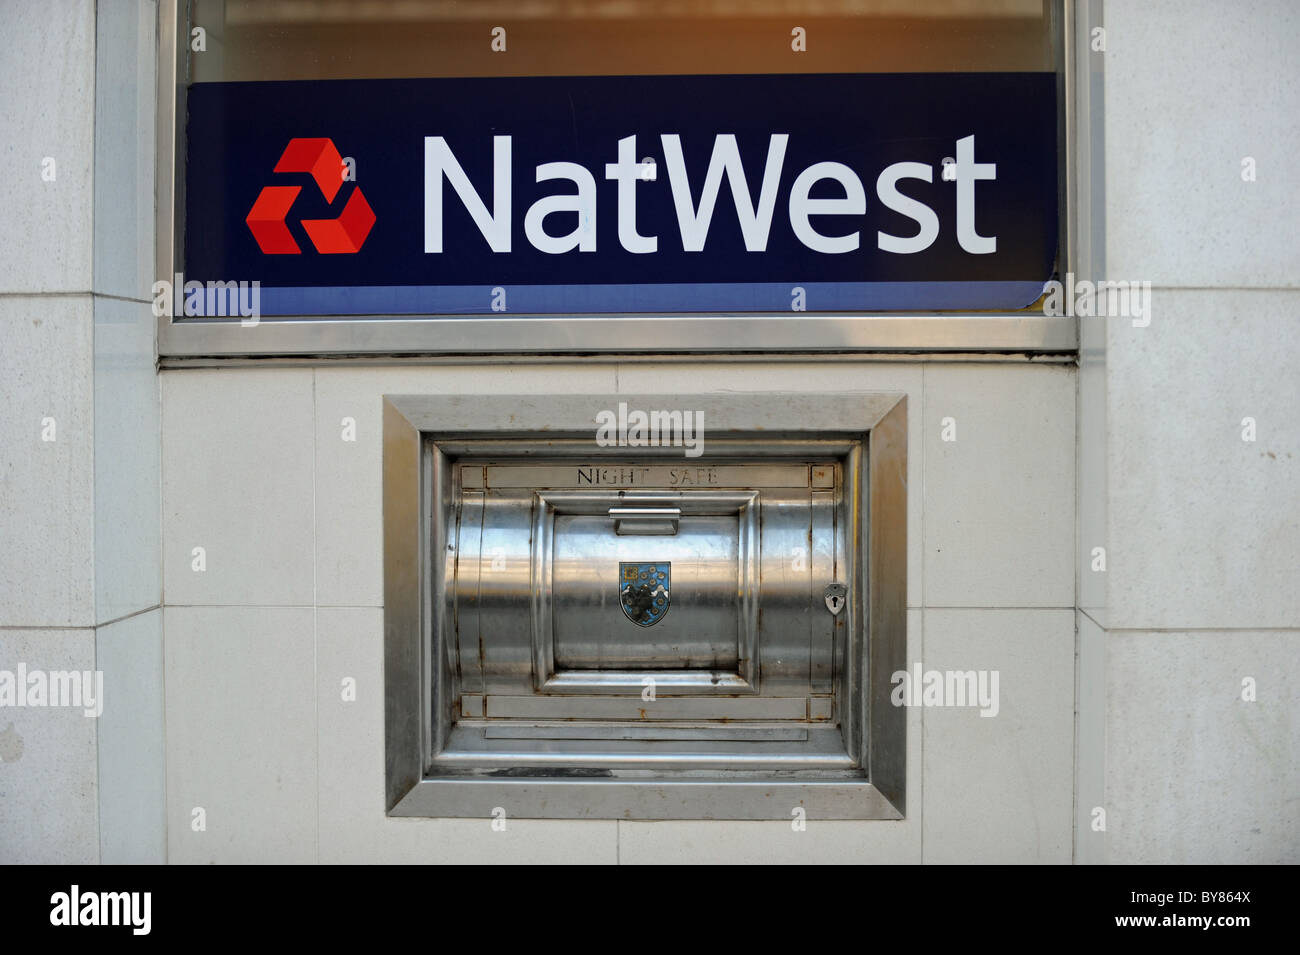 NatWest bank sign and night safe UK Stock Photo